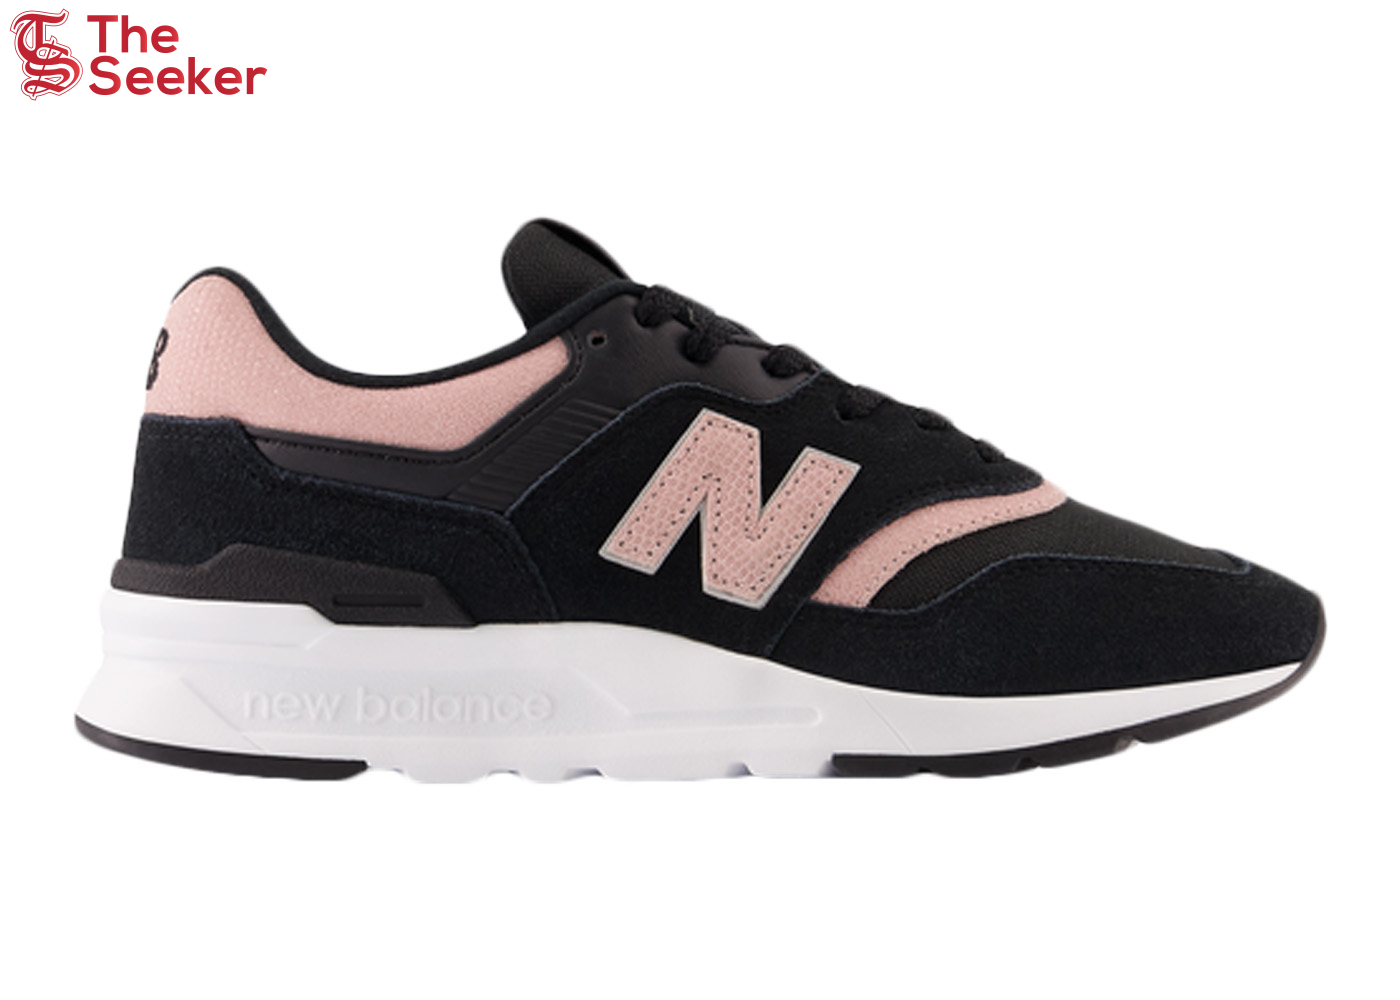 New Balance 997 Black Pink White (Women's)